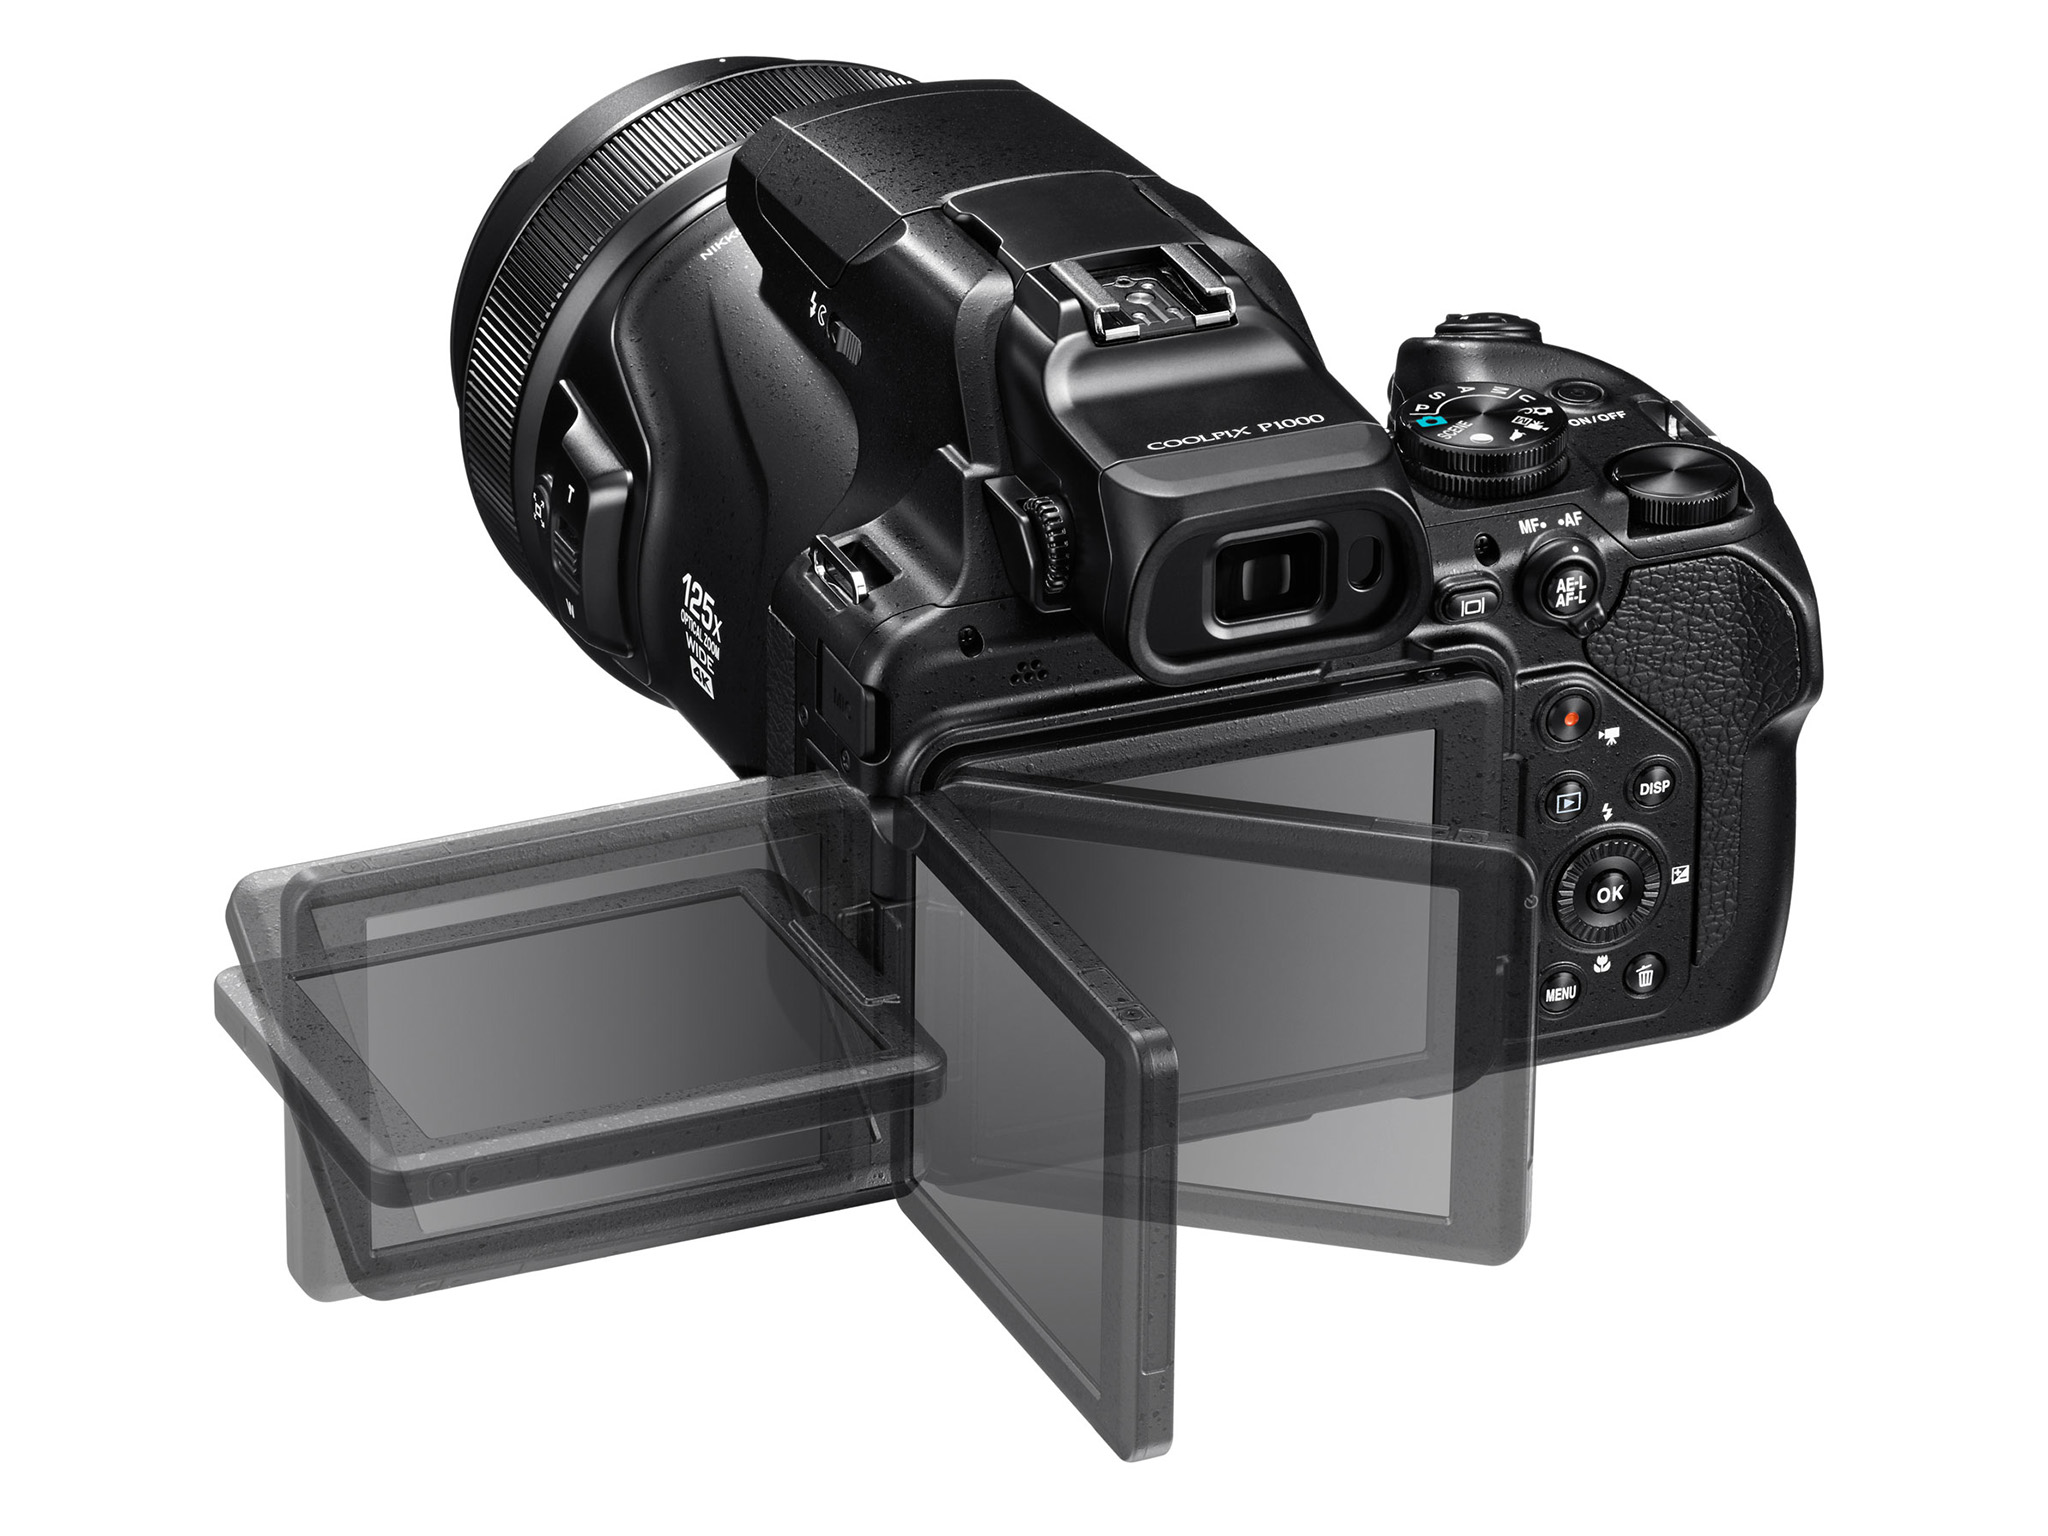 Grondwet Dapper Extra Nikon Coolpix P1000 Review - Photography Life